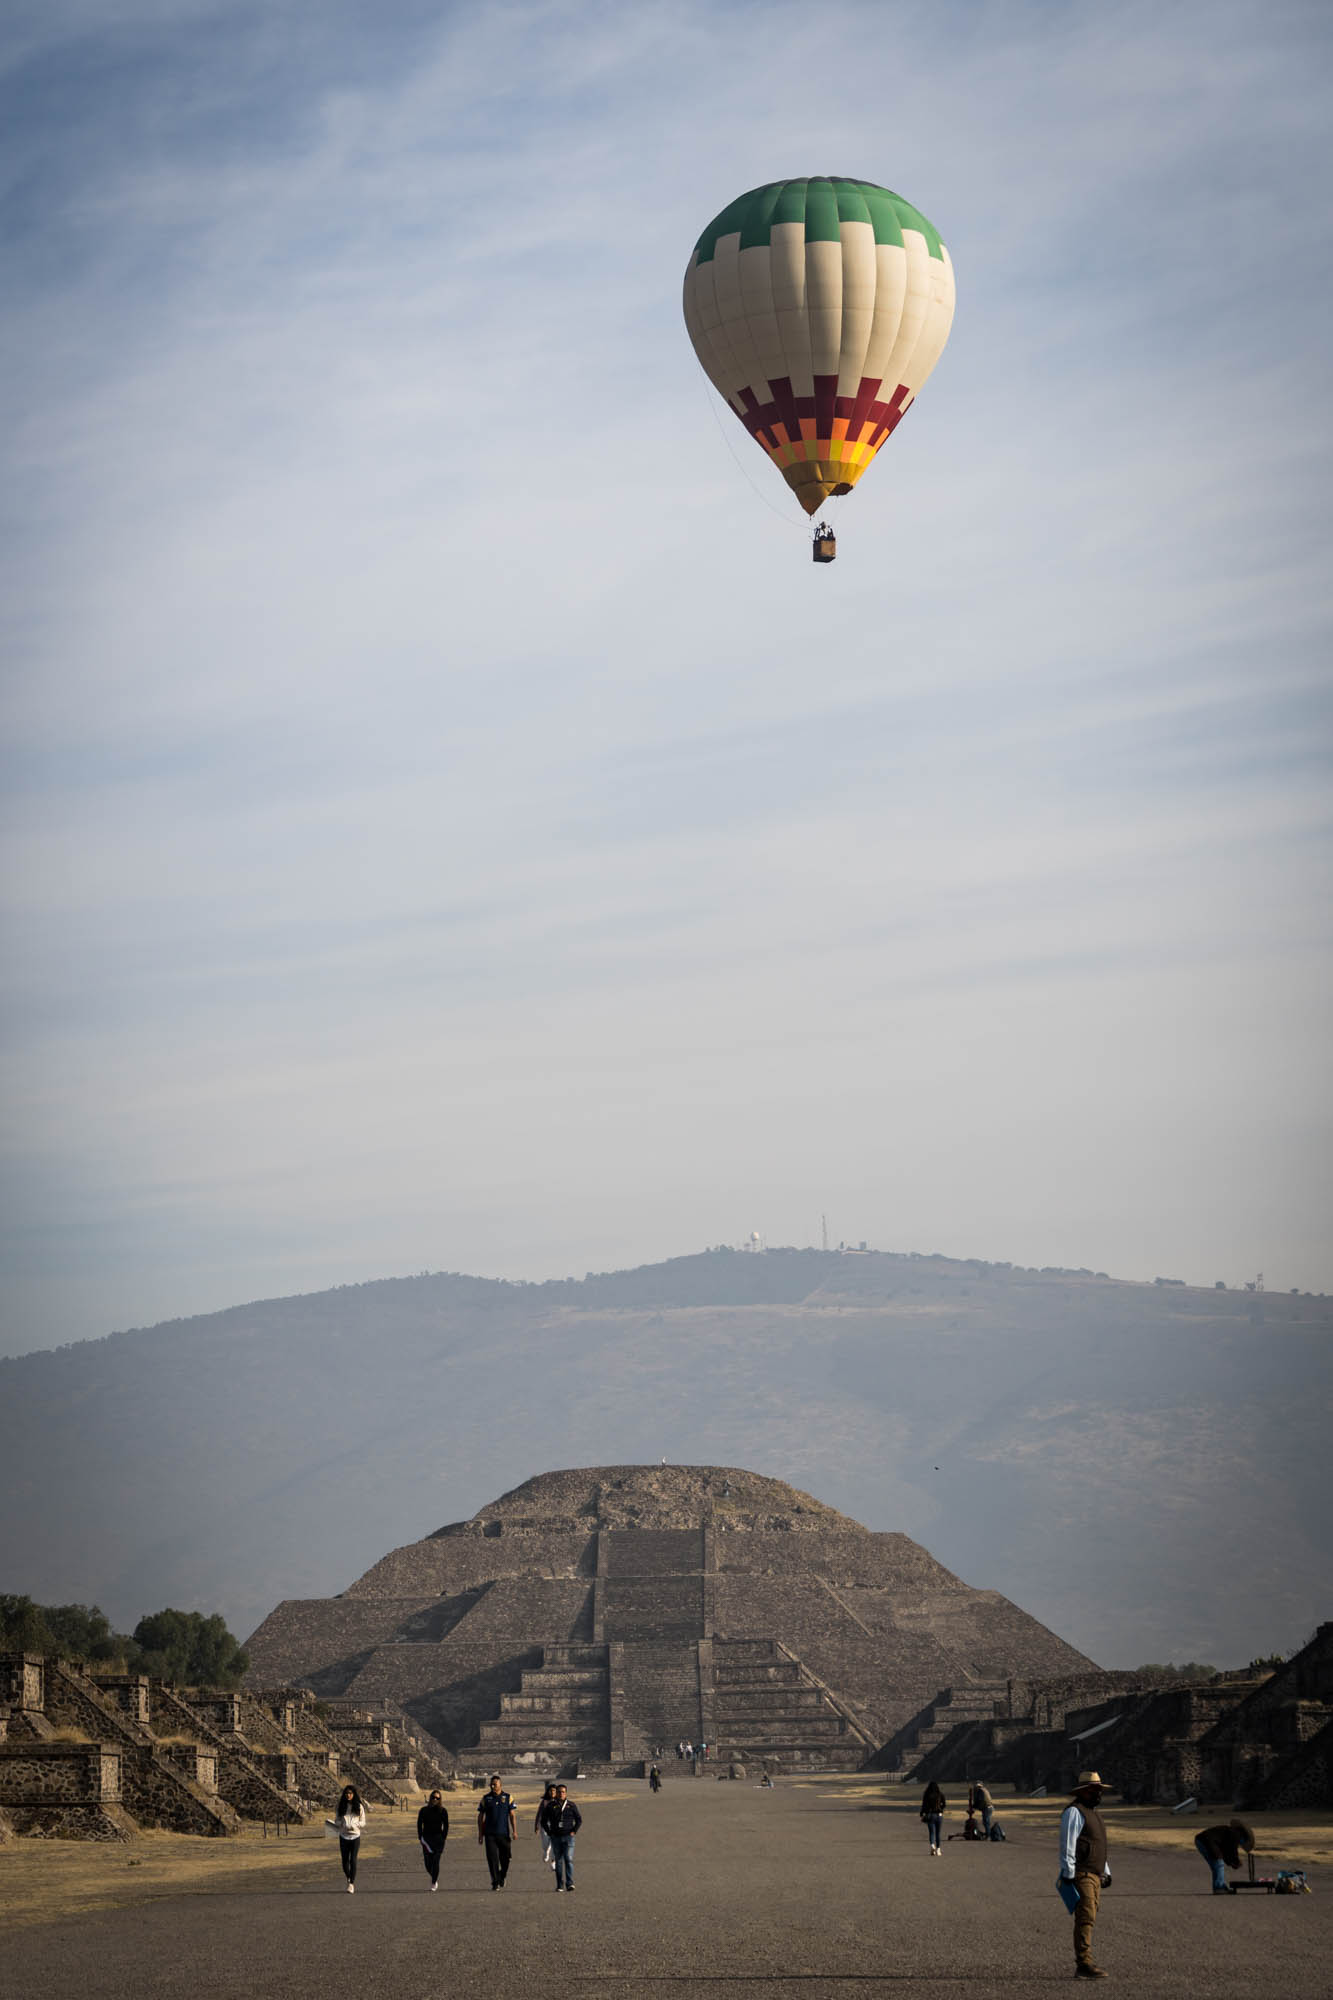 A colorful hot air balloon floats above a pyramid at Teotihuacan